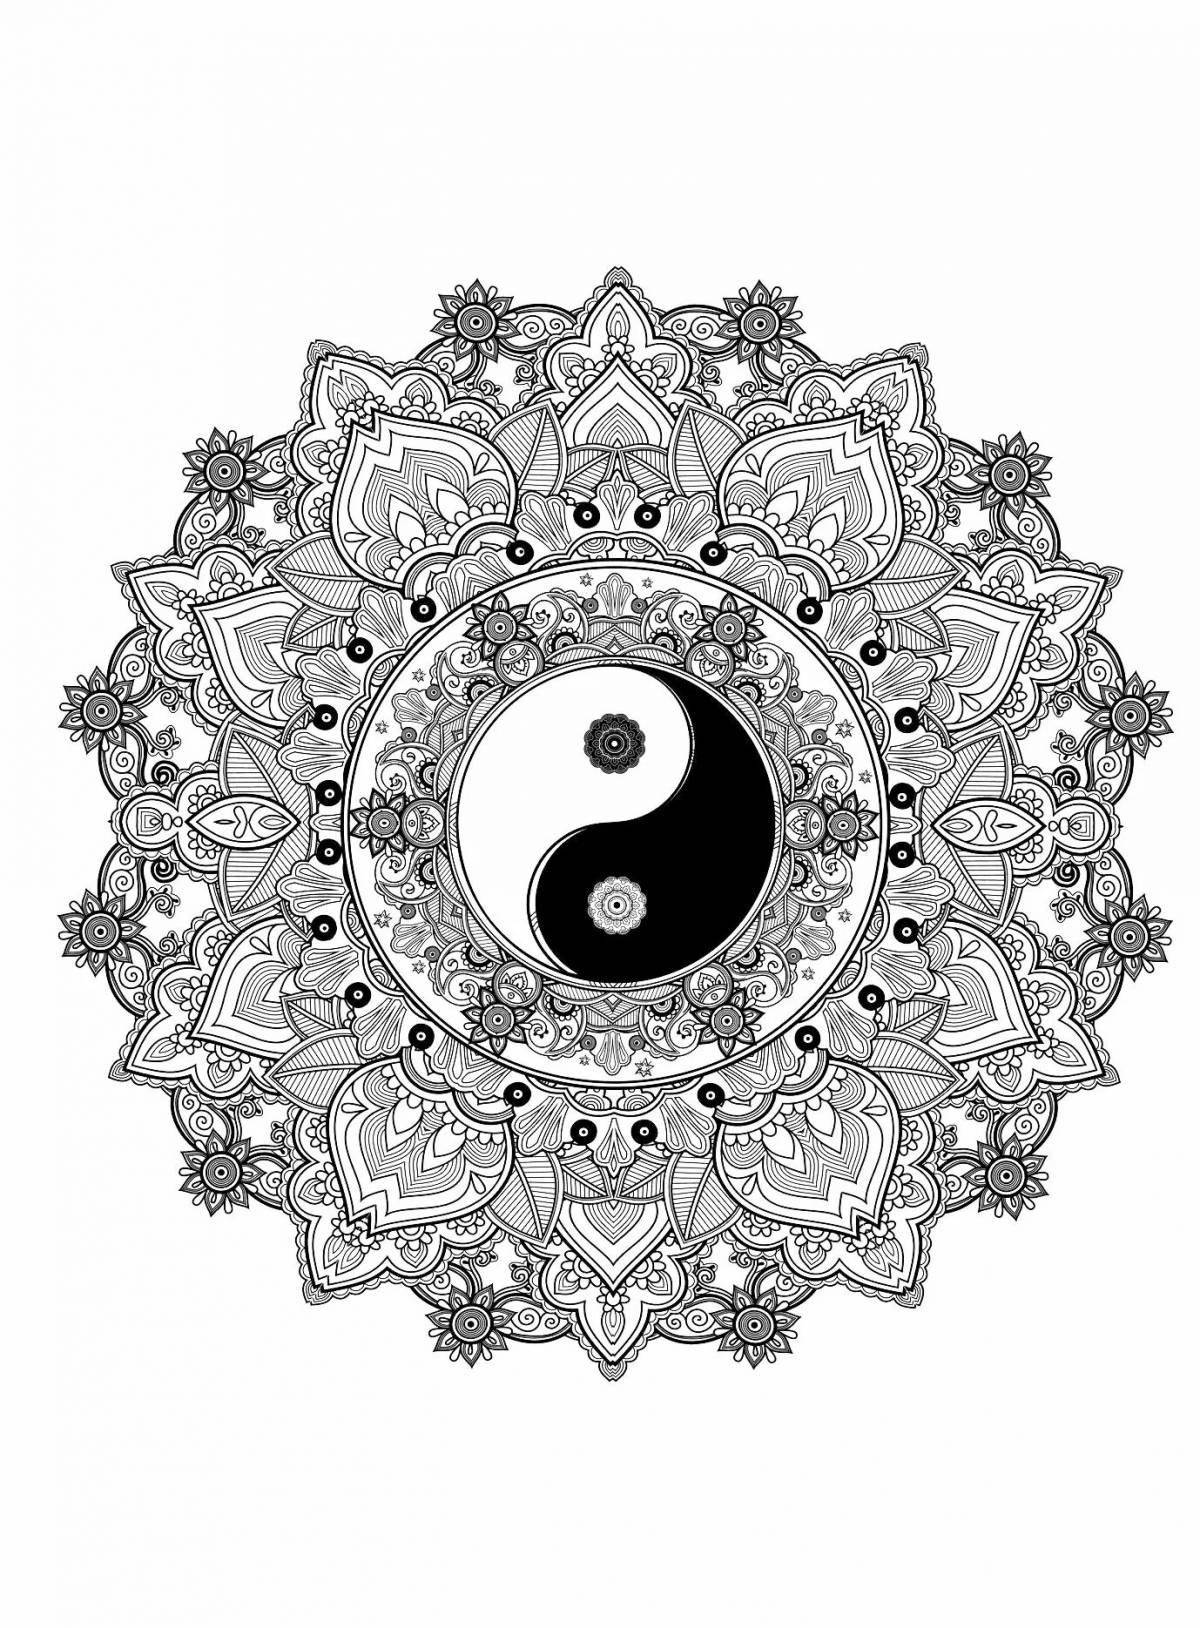 Glorious yin yang coloring page